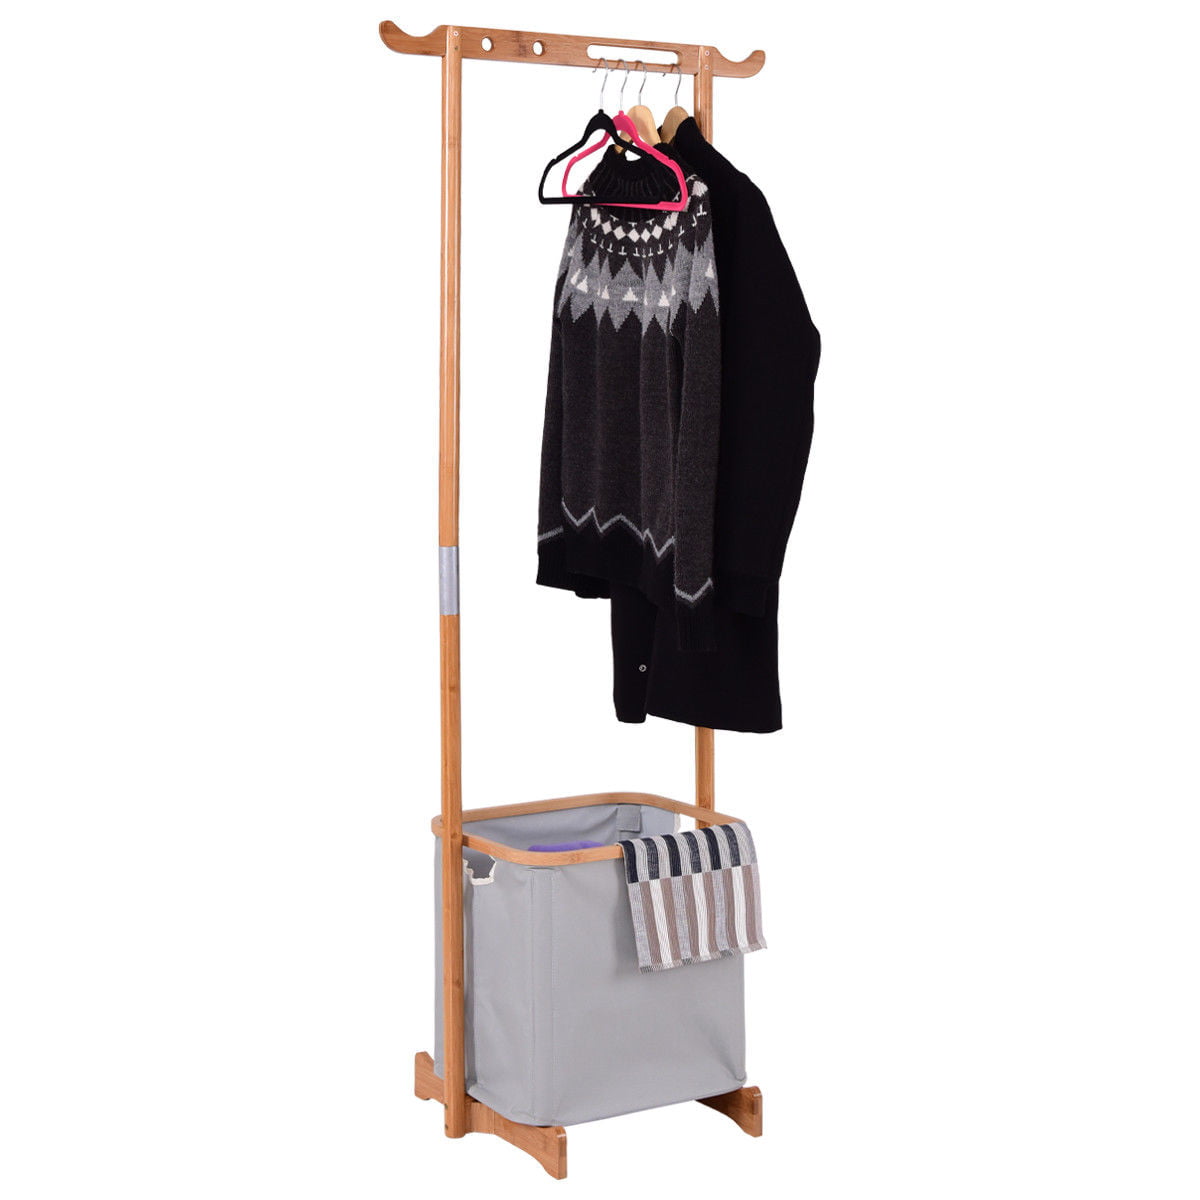 Gymax Bamboo Clothes Drying Rack Laundry Hamper Garment Hanger Storage Organizer